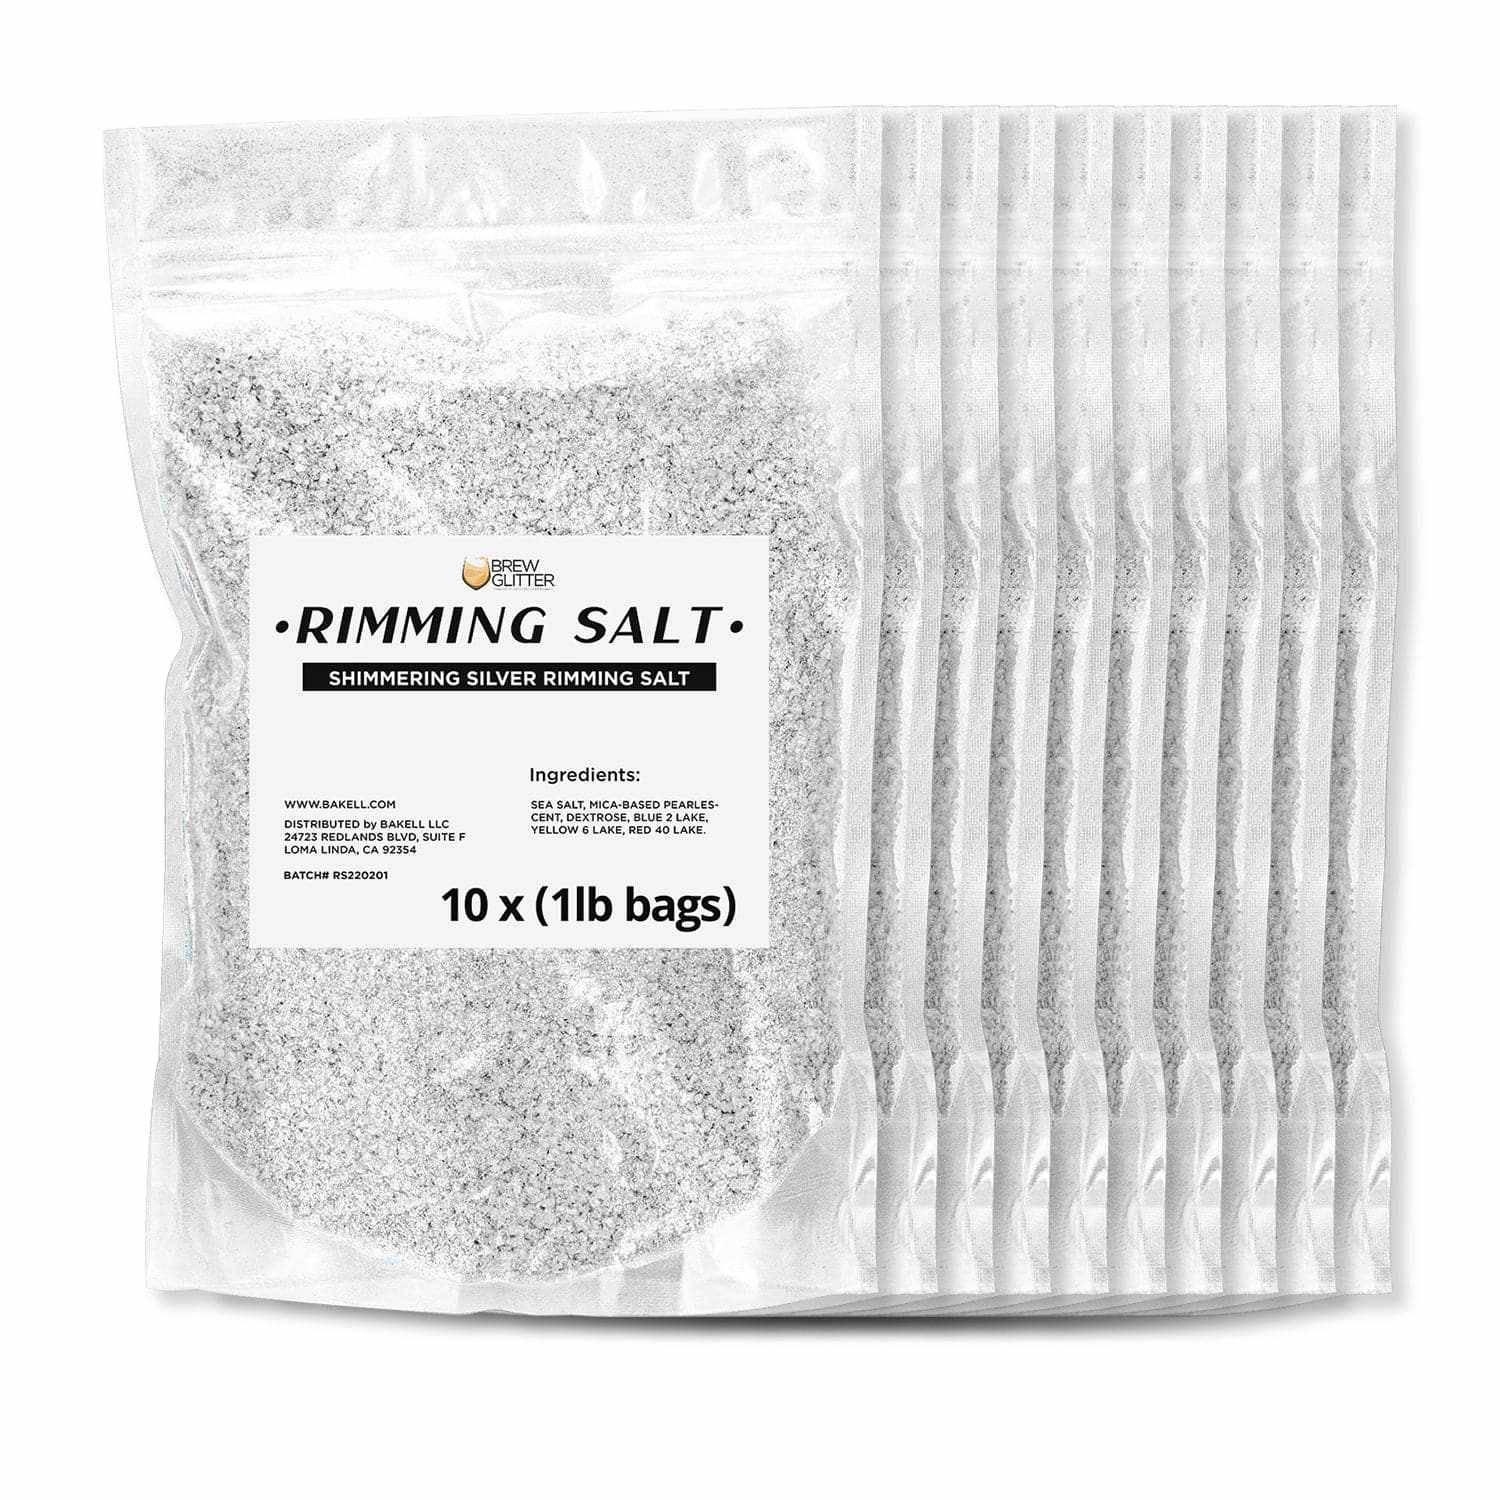 Shimmering Silver Rimming Salt Wholesale Rimming Salt | Bakell